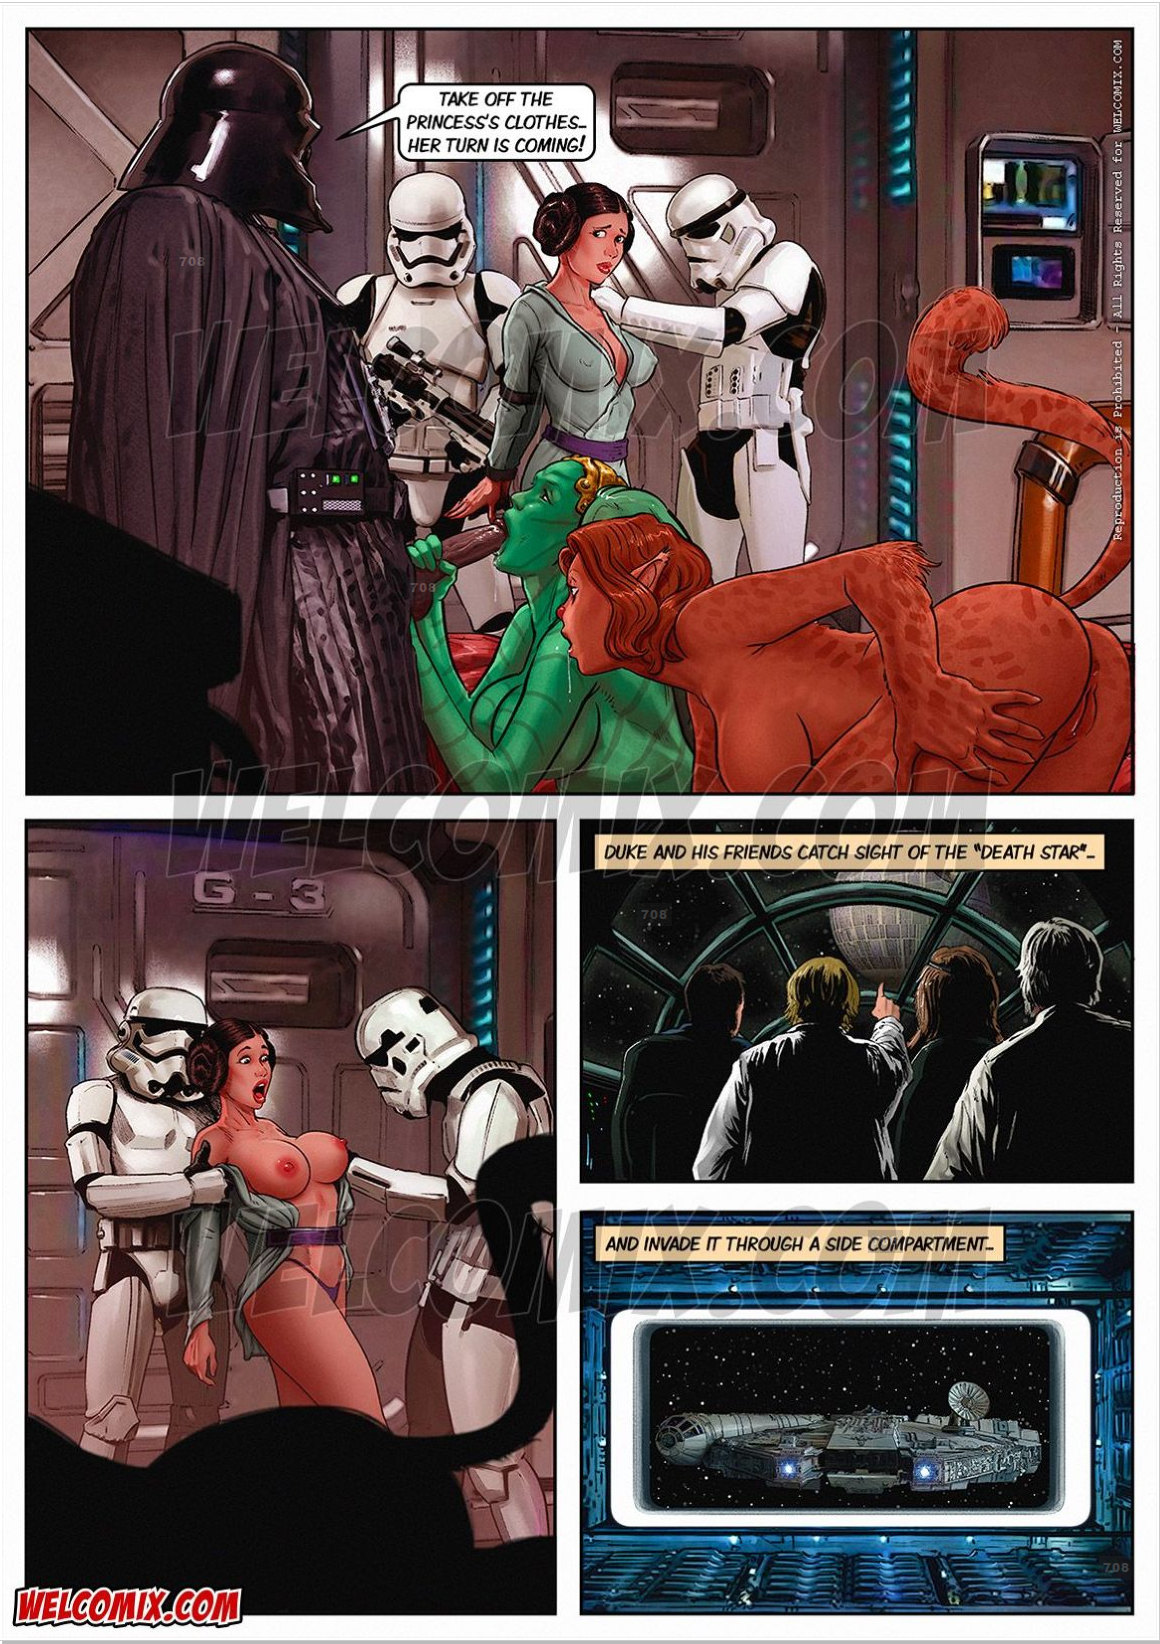 BlockBuster-Comics-03-Star-Wars-English-page13--Gotofap.tk--12915288.png